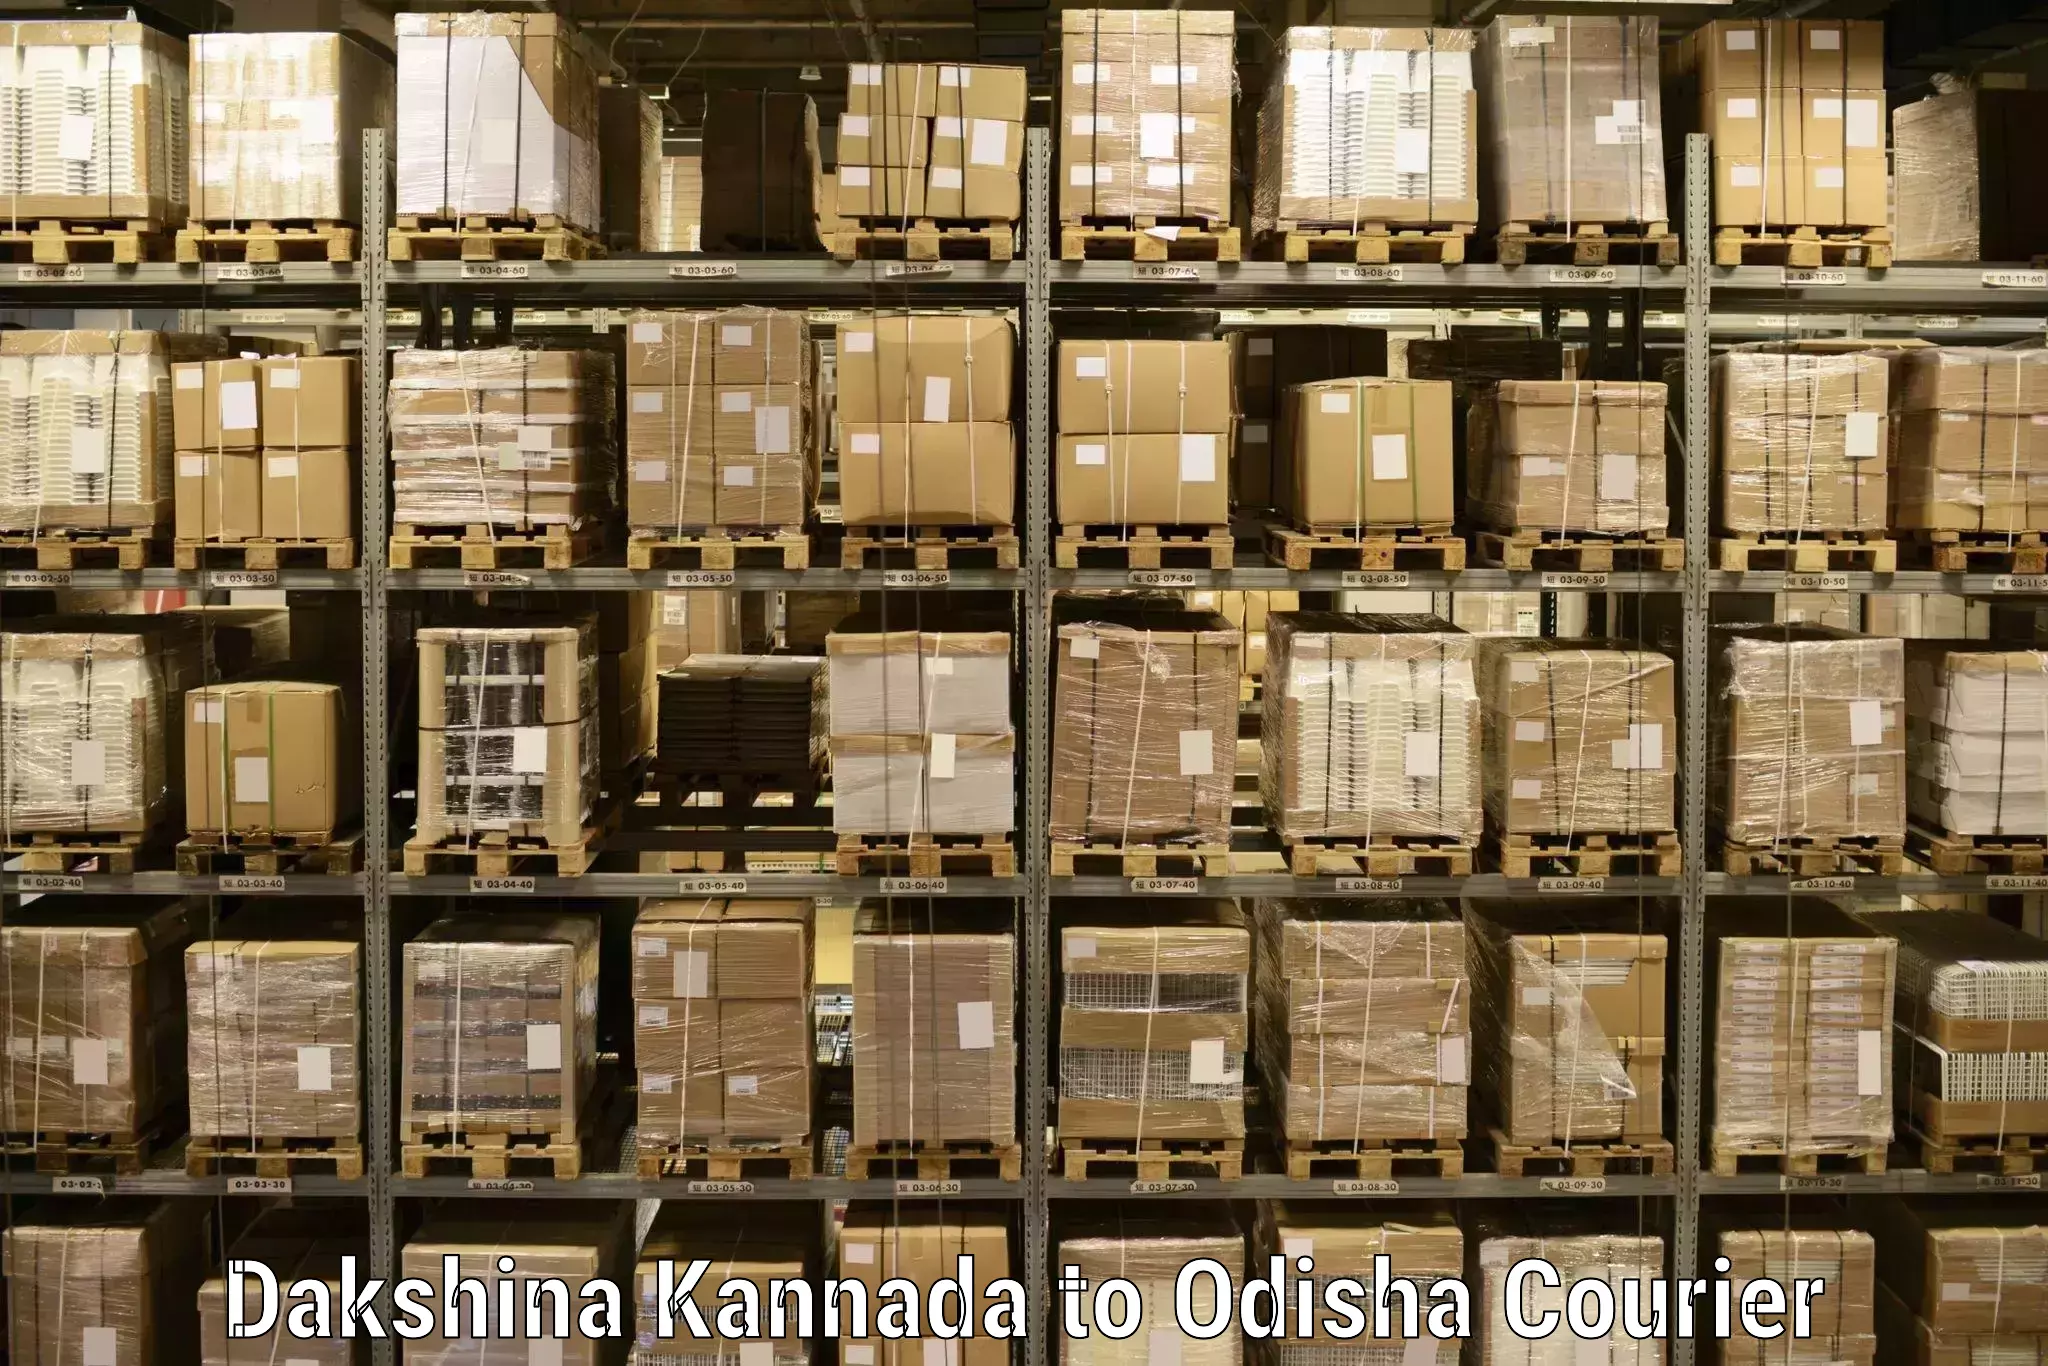 Courier service efficiency Dakshina Kannada to Bhadrak